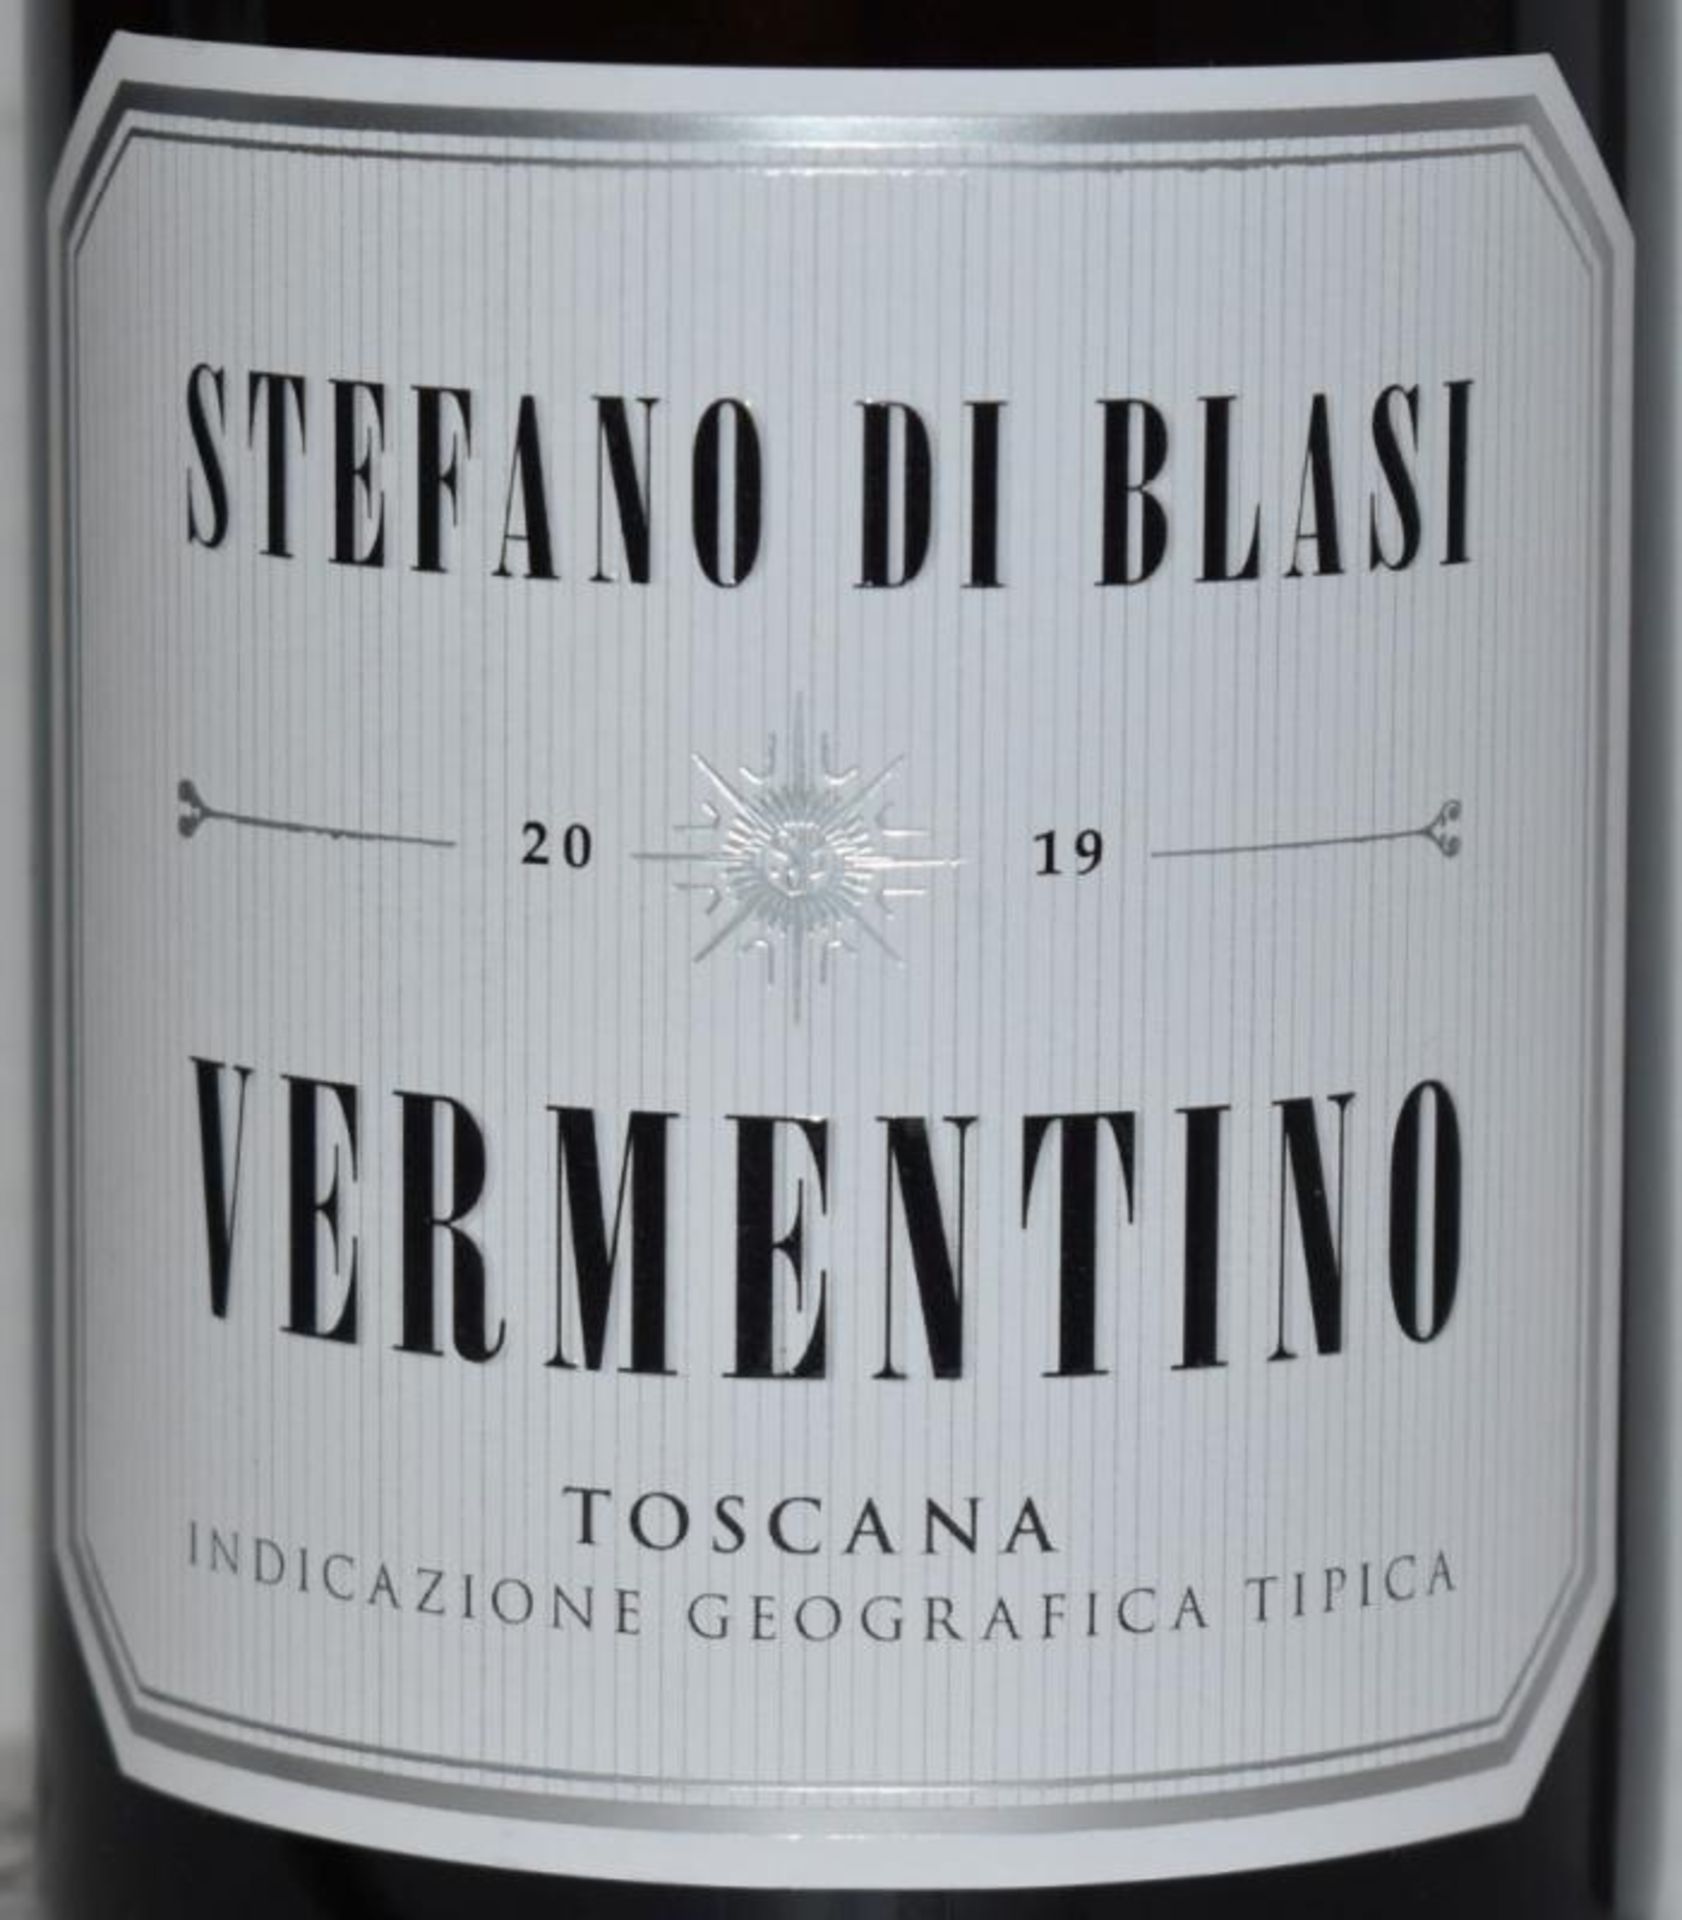 12 x Bottles of Stefano Di Blasi 2019 Vermentino Toscana 13.5% Wine - 750ml Bottles - Drink Until - Image 6 of 7